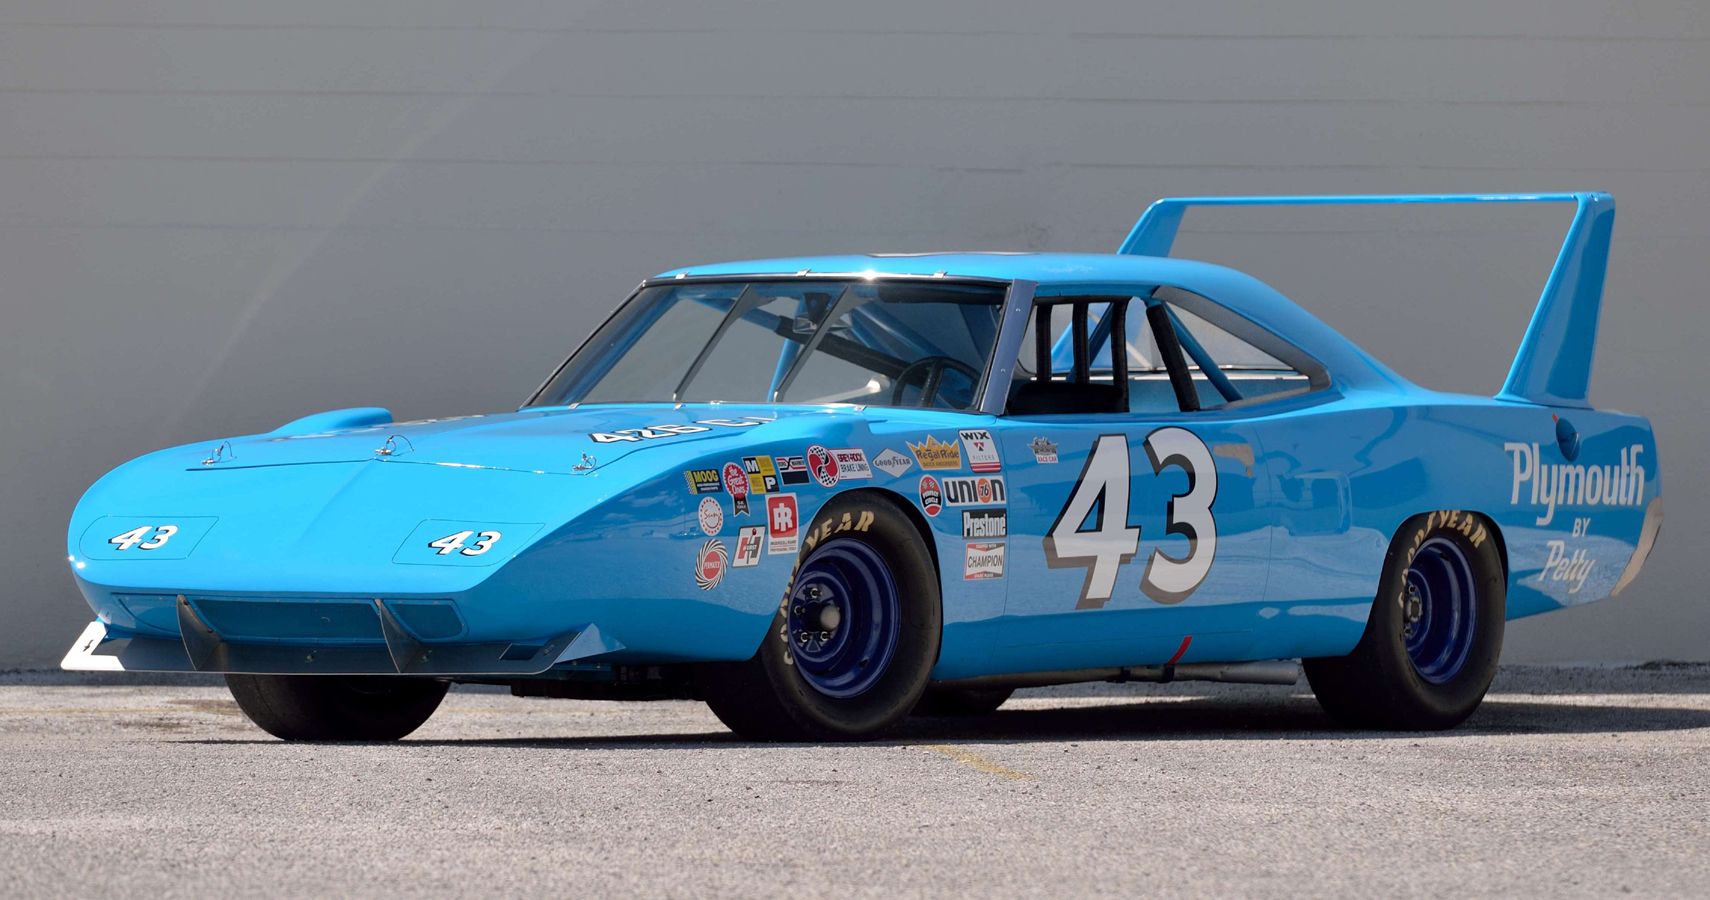 NASCAR Legend Richard Petty's 1970 Plymouth Superbird 